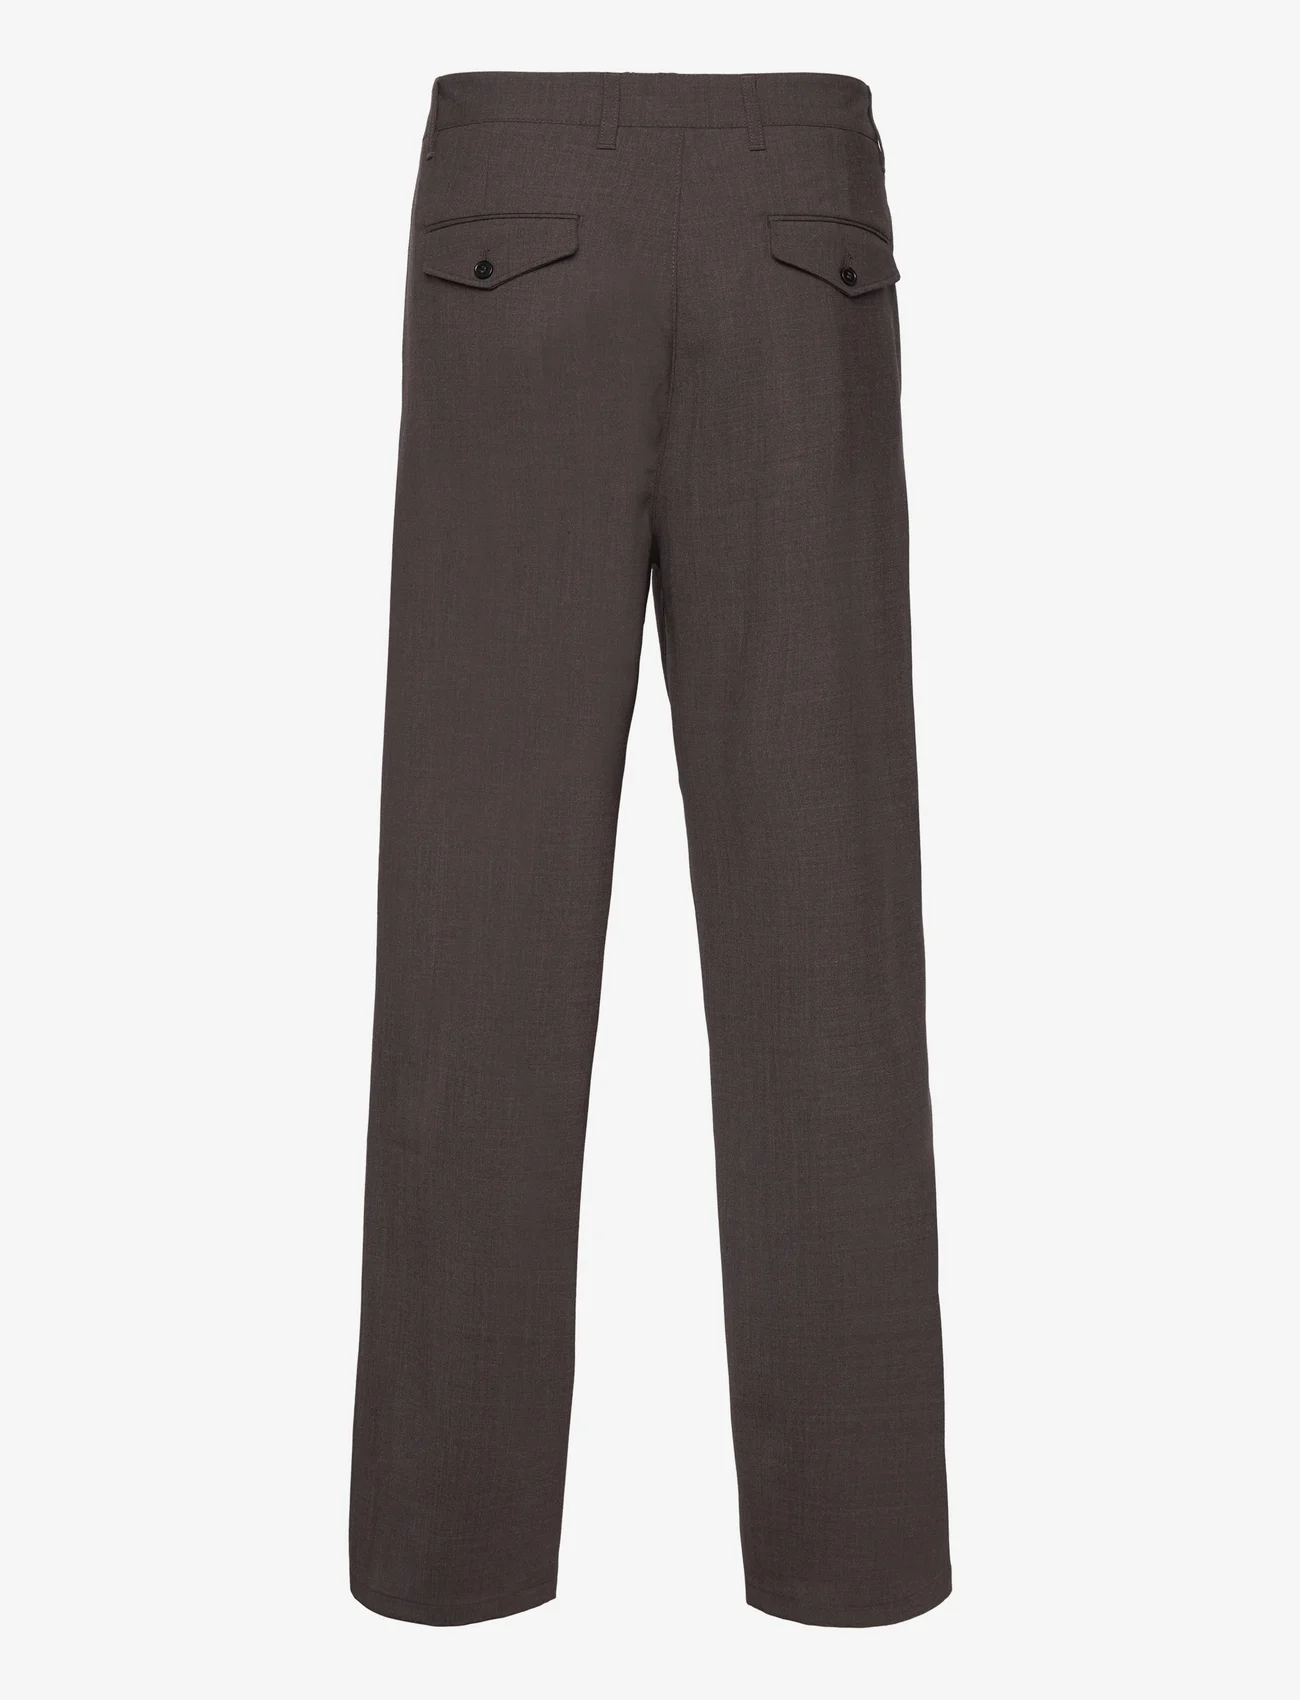 Hope - Wide-leg Suit Trousers - suit trousers - brown melange - 1